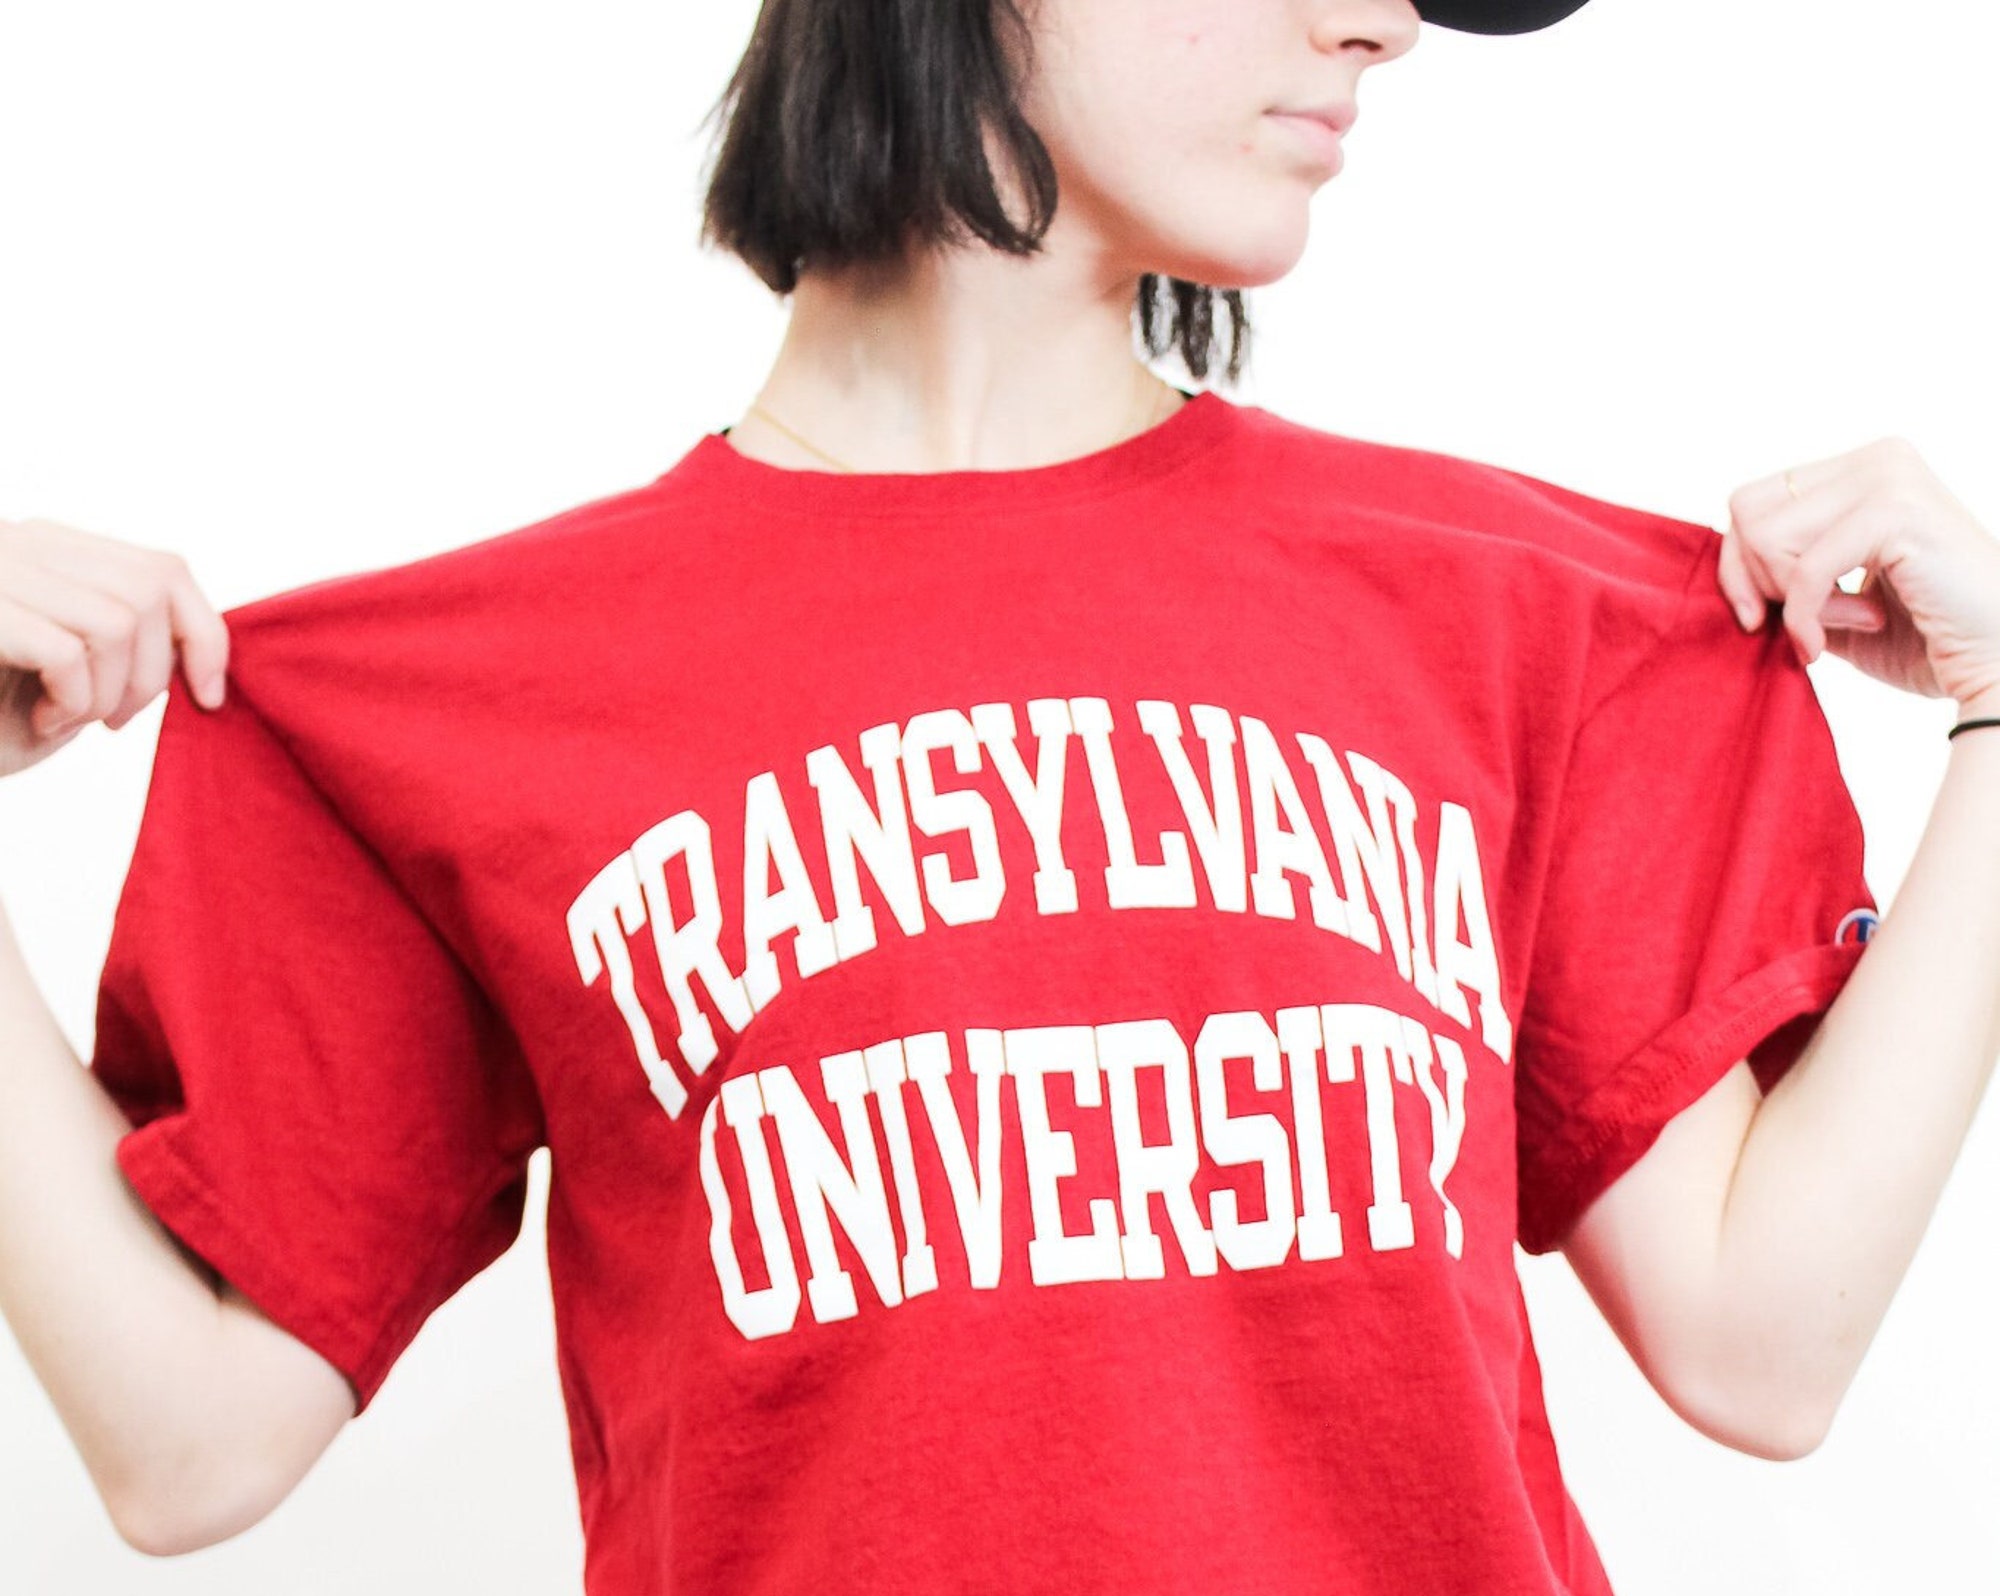 Discover Transylvania University Tee